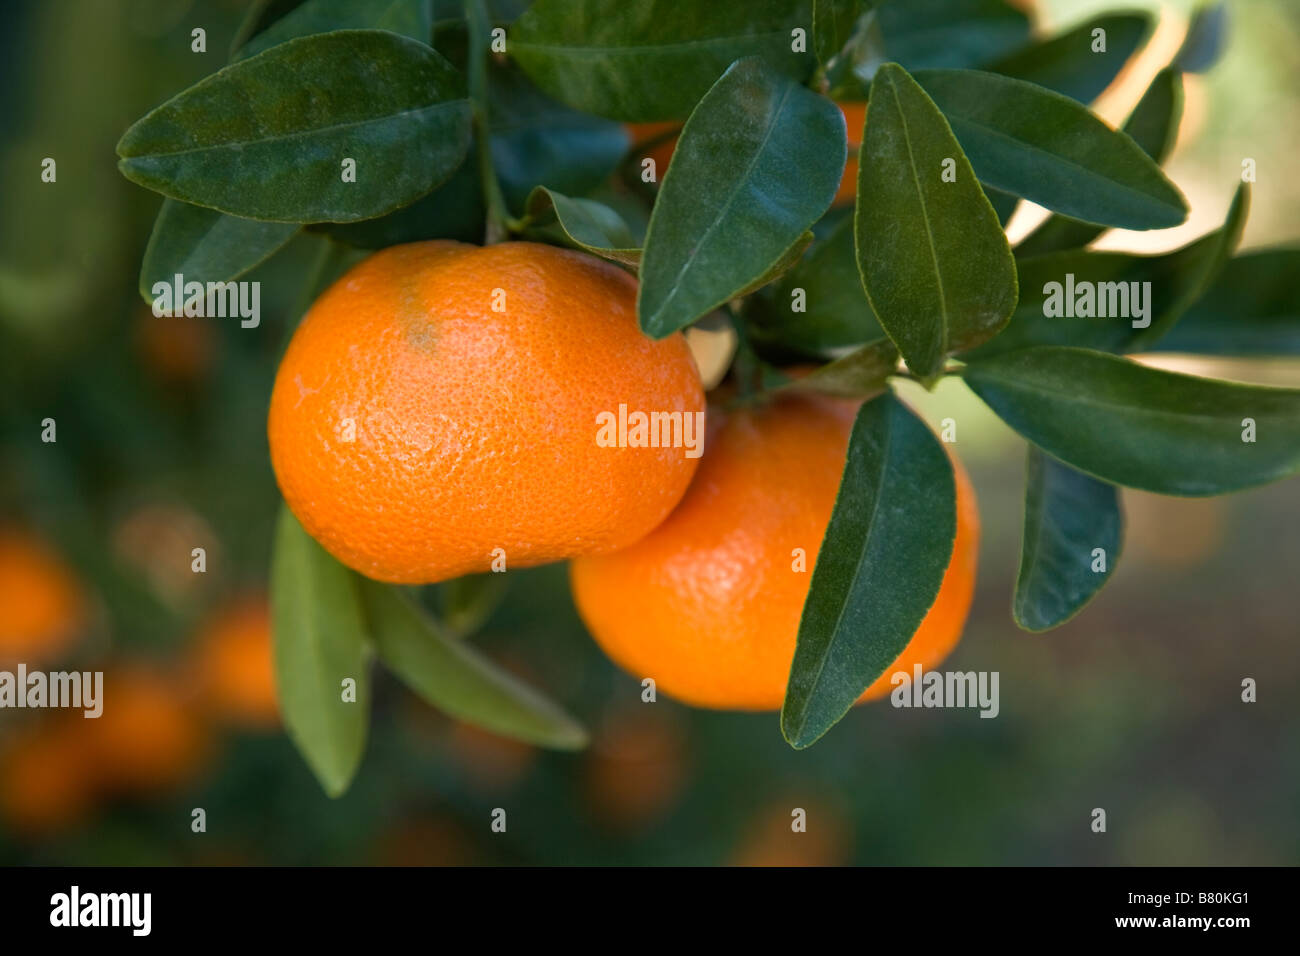 Mature Mandarins on branch. Stock Photo